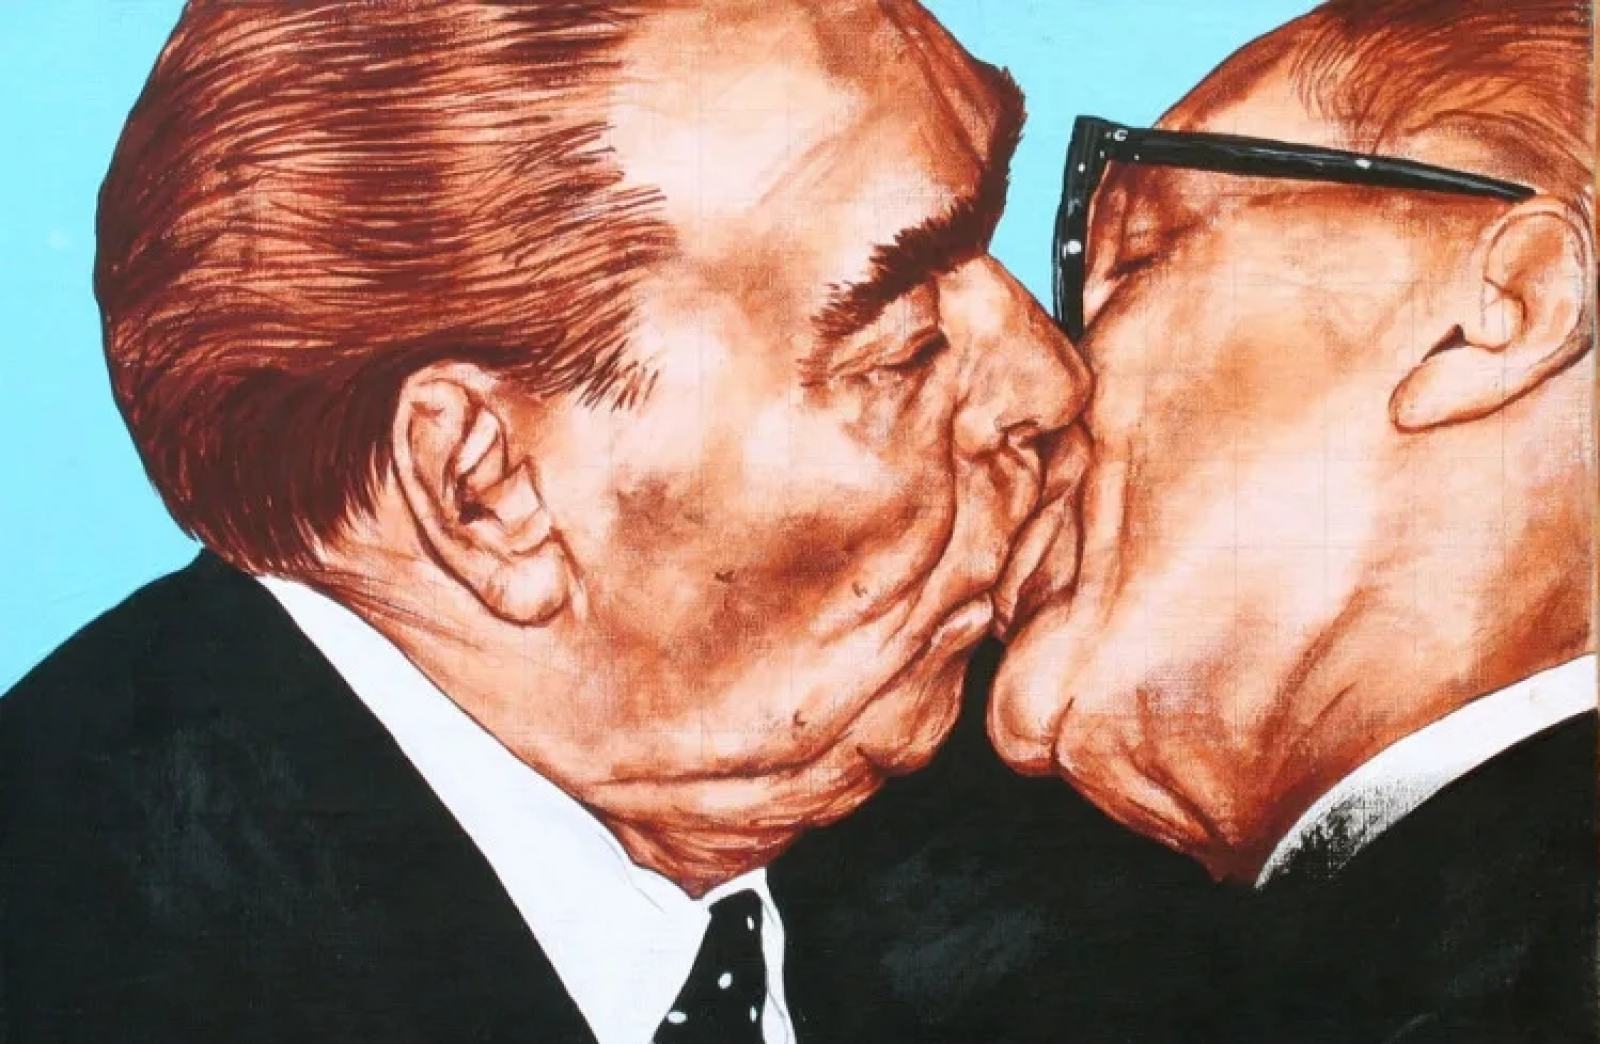 Враги целуют жадно 2 часть. Брежнев и Хонеккер поцелуй. Брежнев целует в губы Хонеккера. Поцелуй Брежнева и Хонеккера арт.